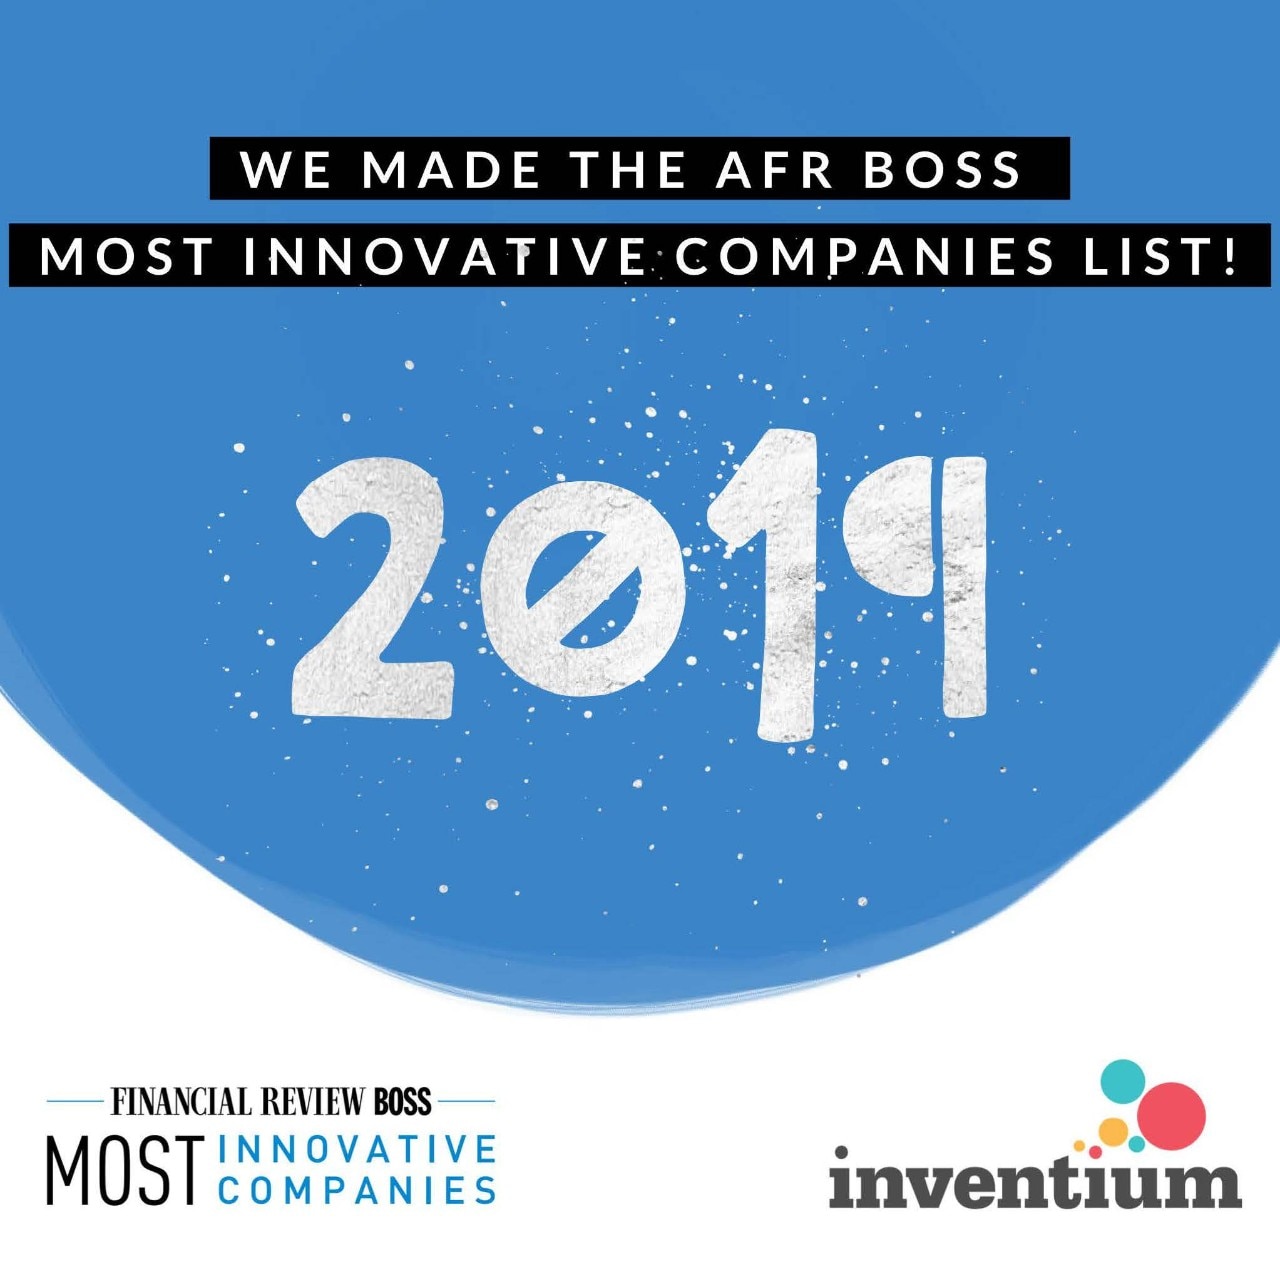 AFR BOSS most innovative companies list 2019